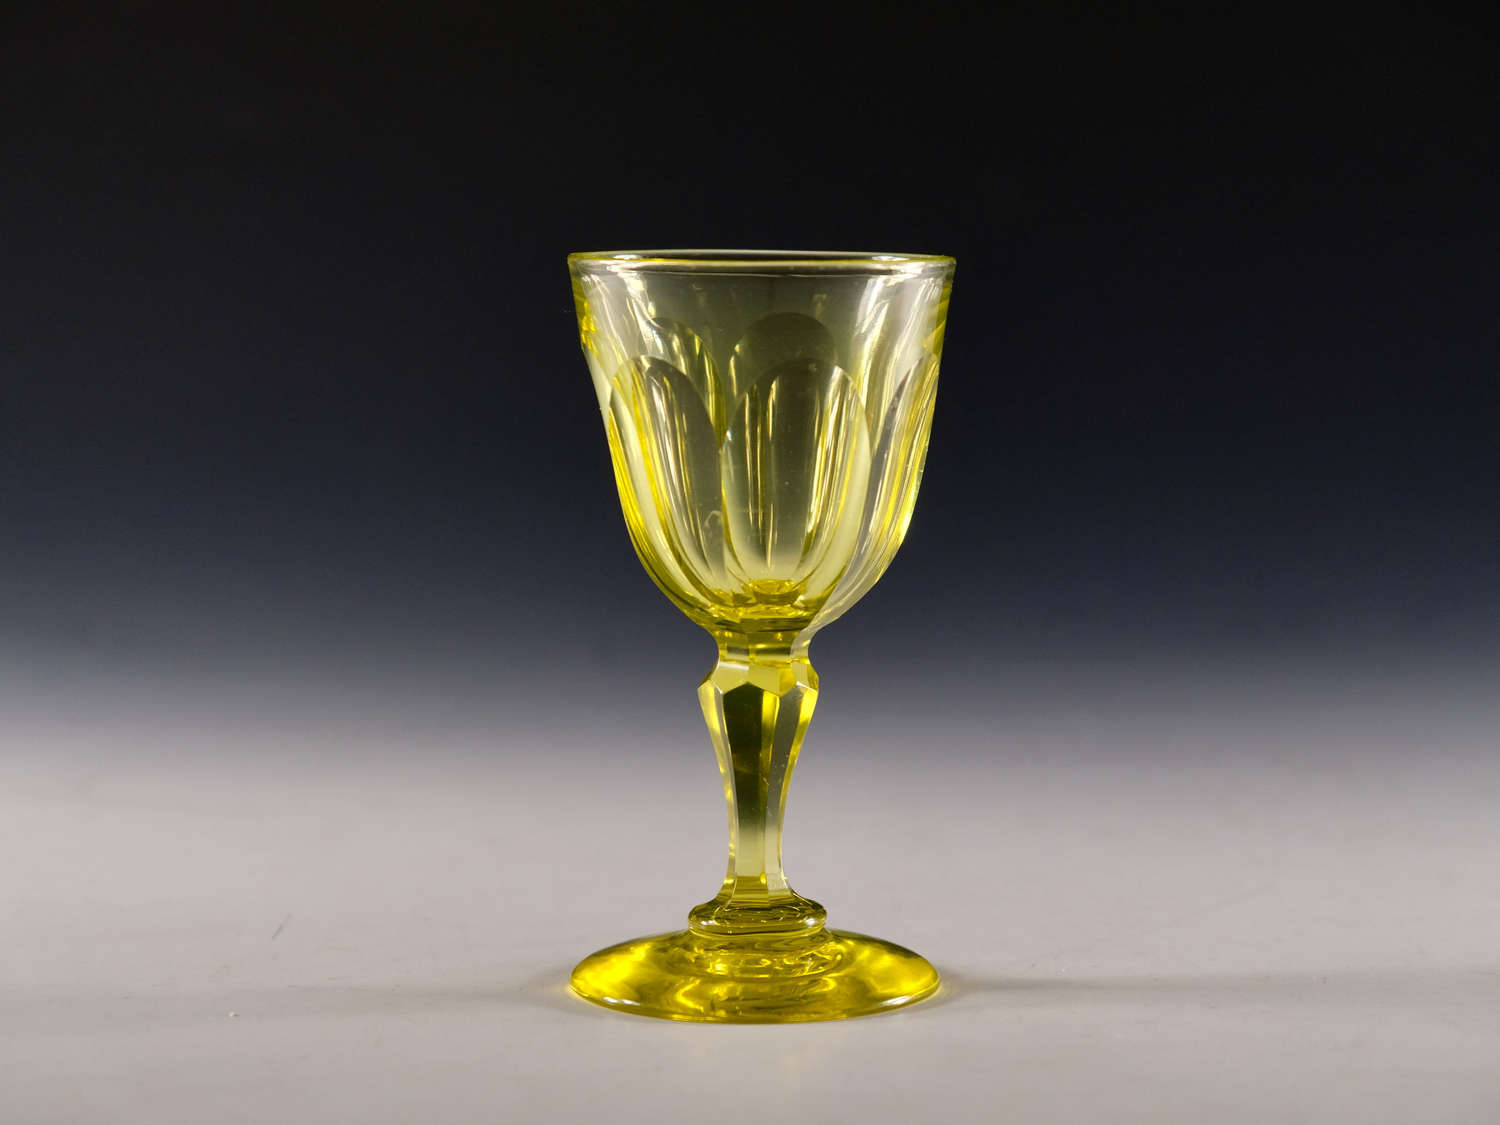 Antique glass - Yellow wine glass English c1850/60